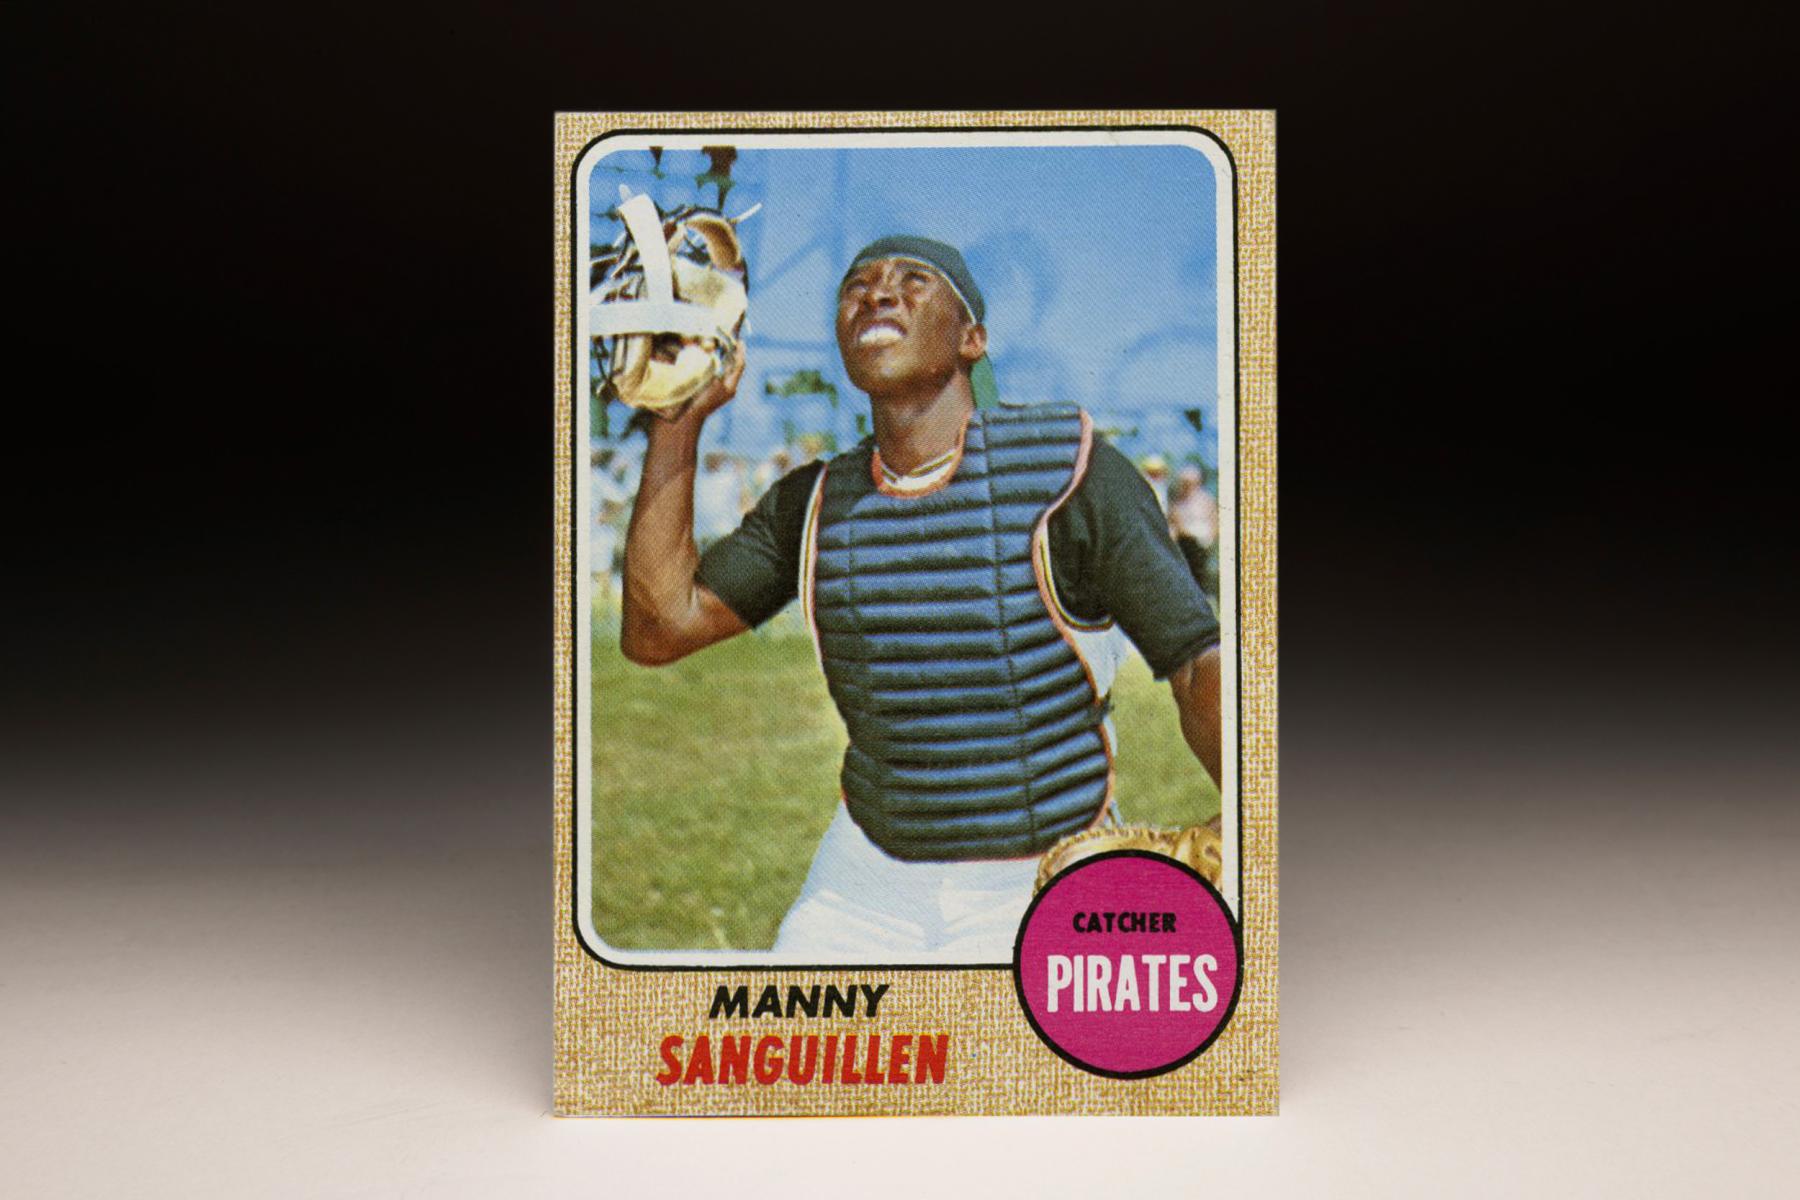 Catcher Manny Sanguillen a member of the 1971 World Champion